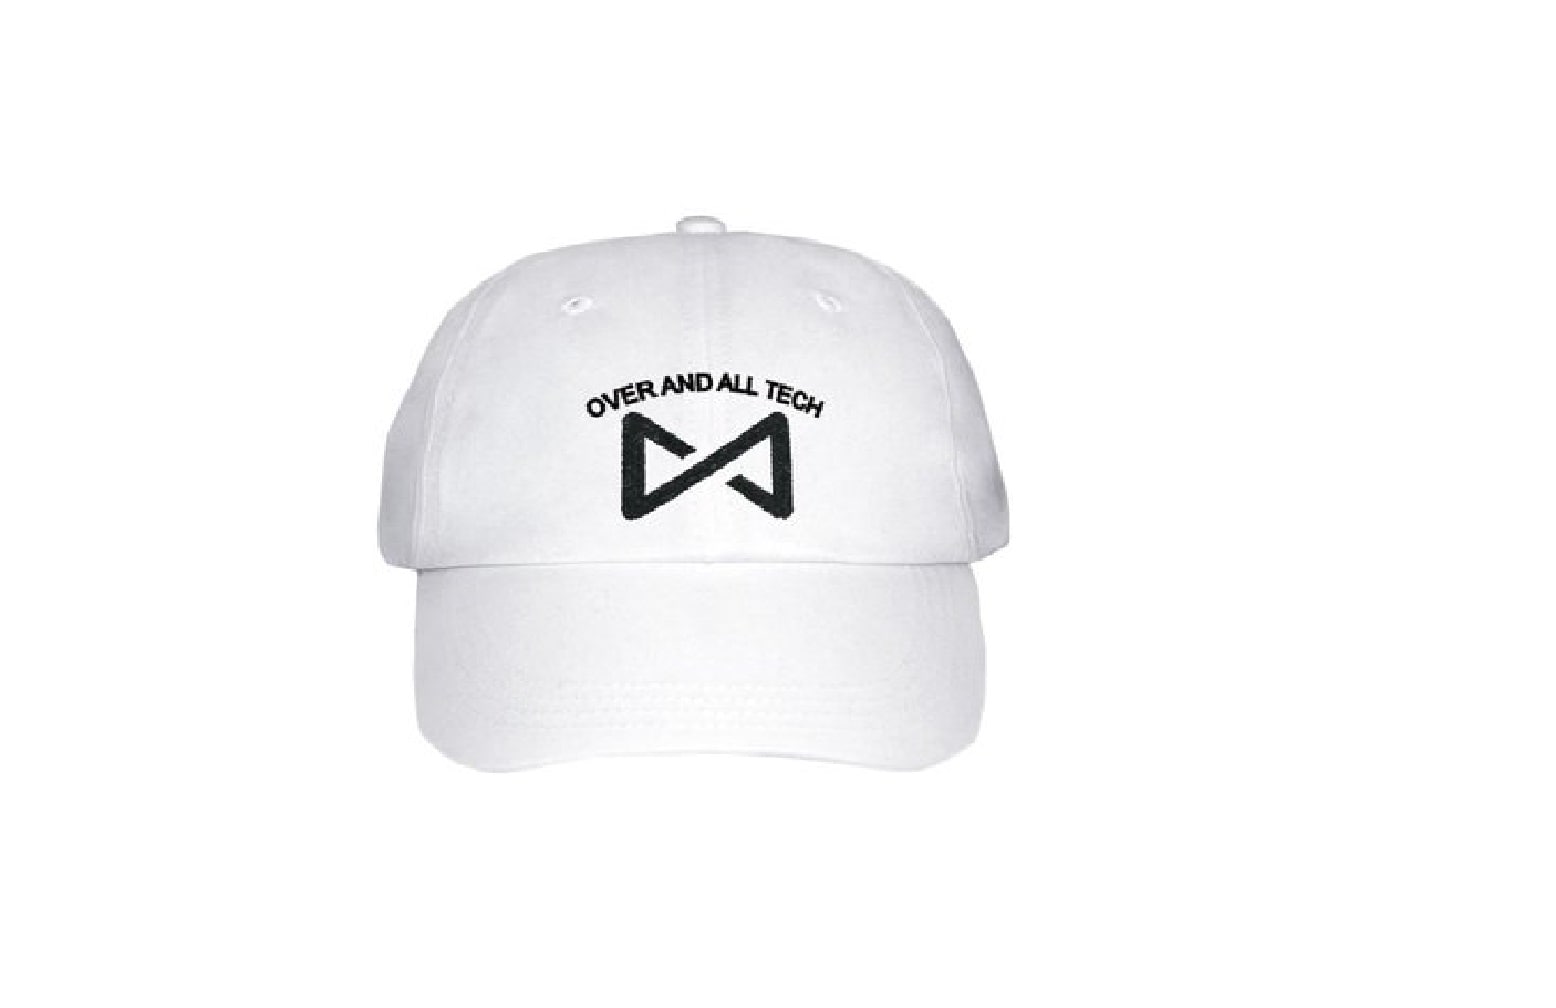 Customized Branding On Caps & Hats